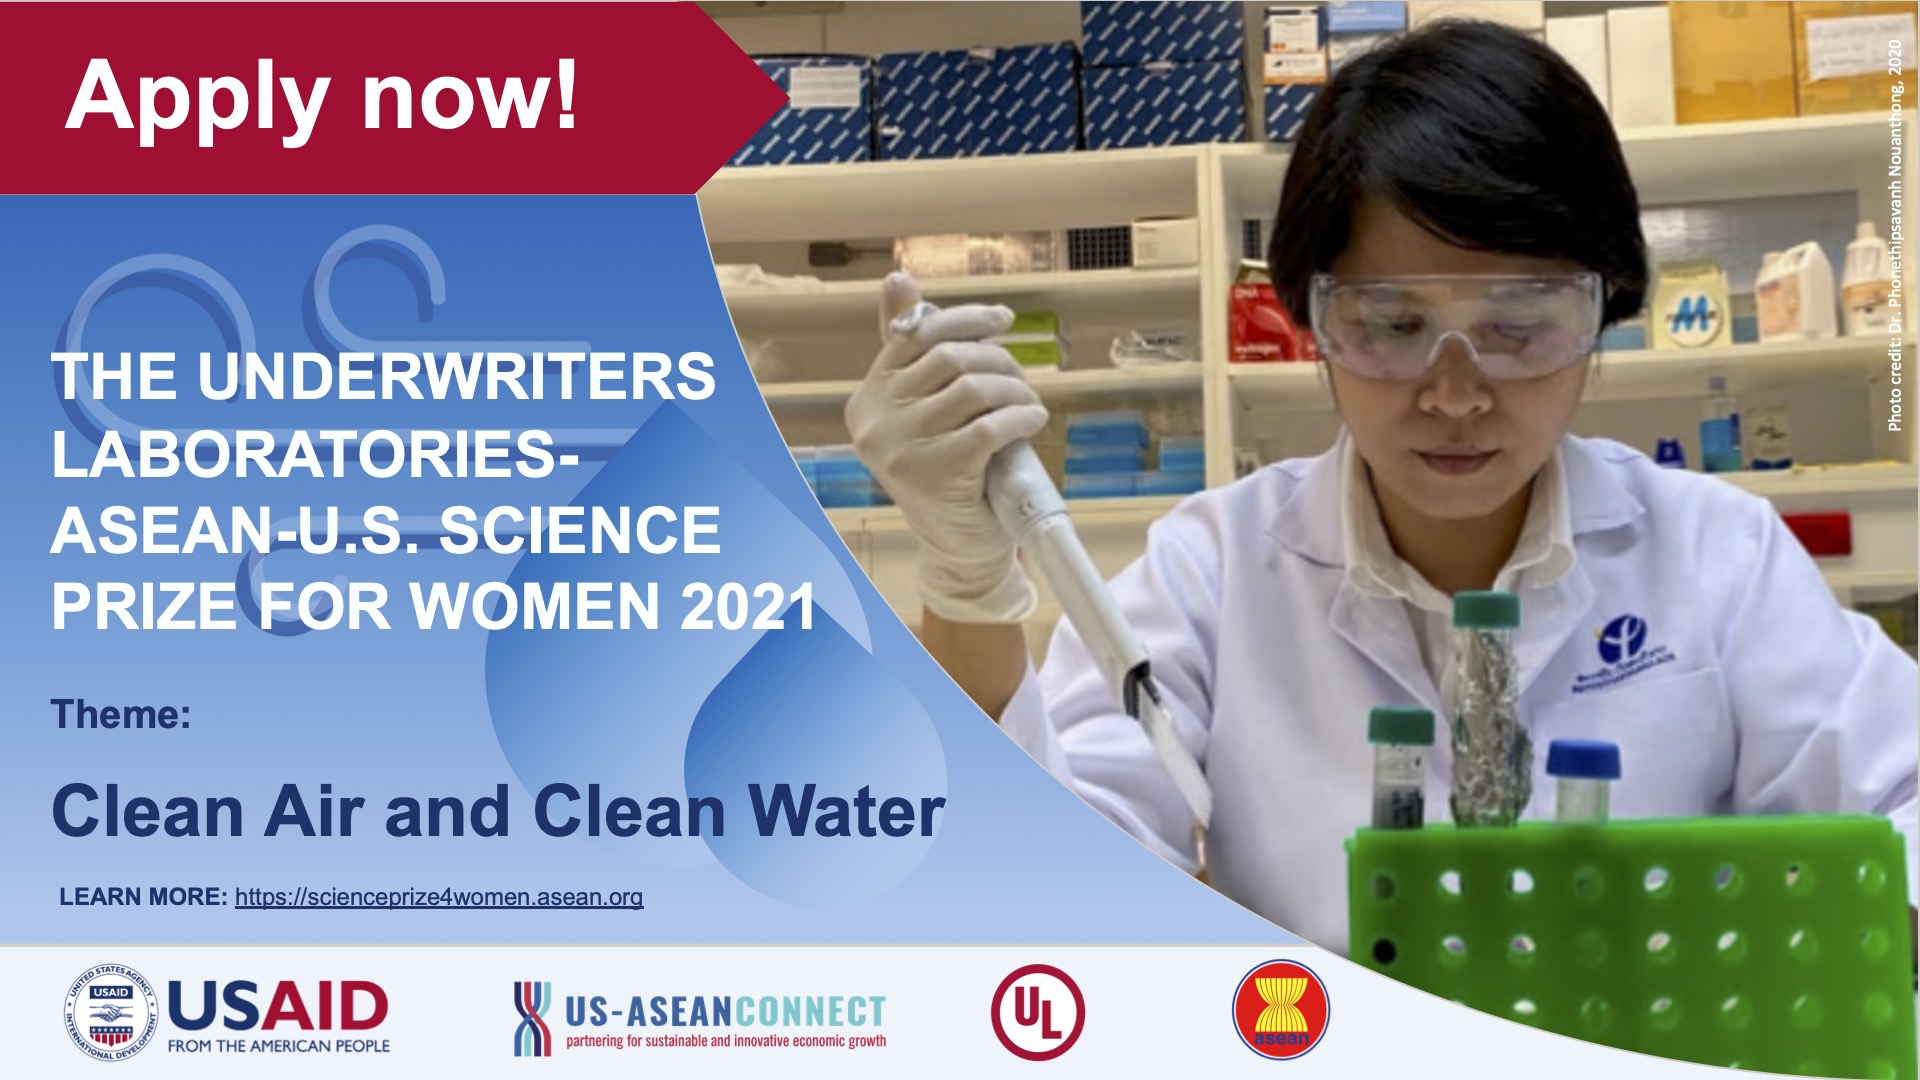 ASEAN – U.S. Science Prize for Women 2021